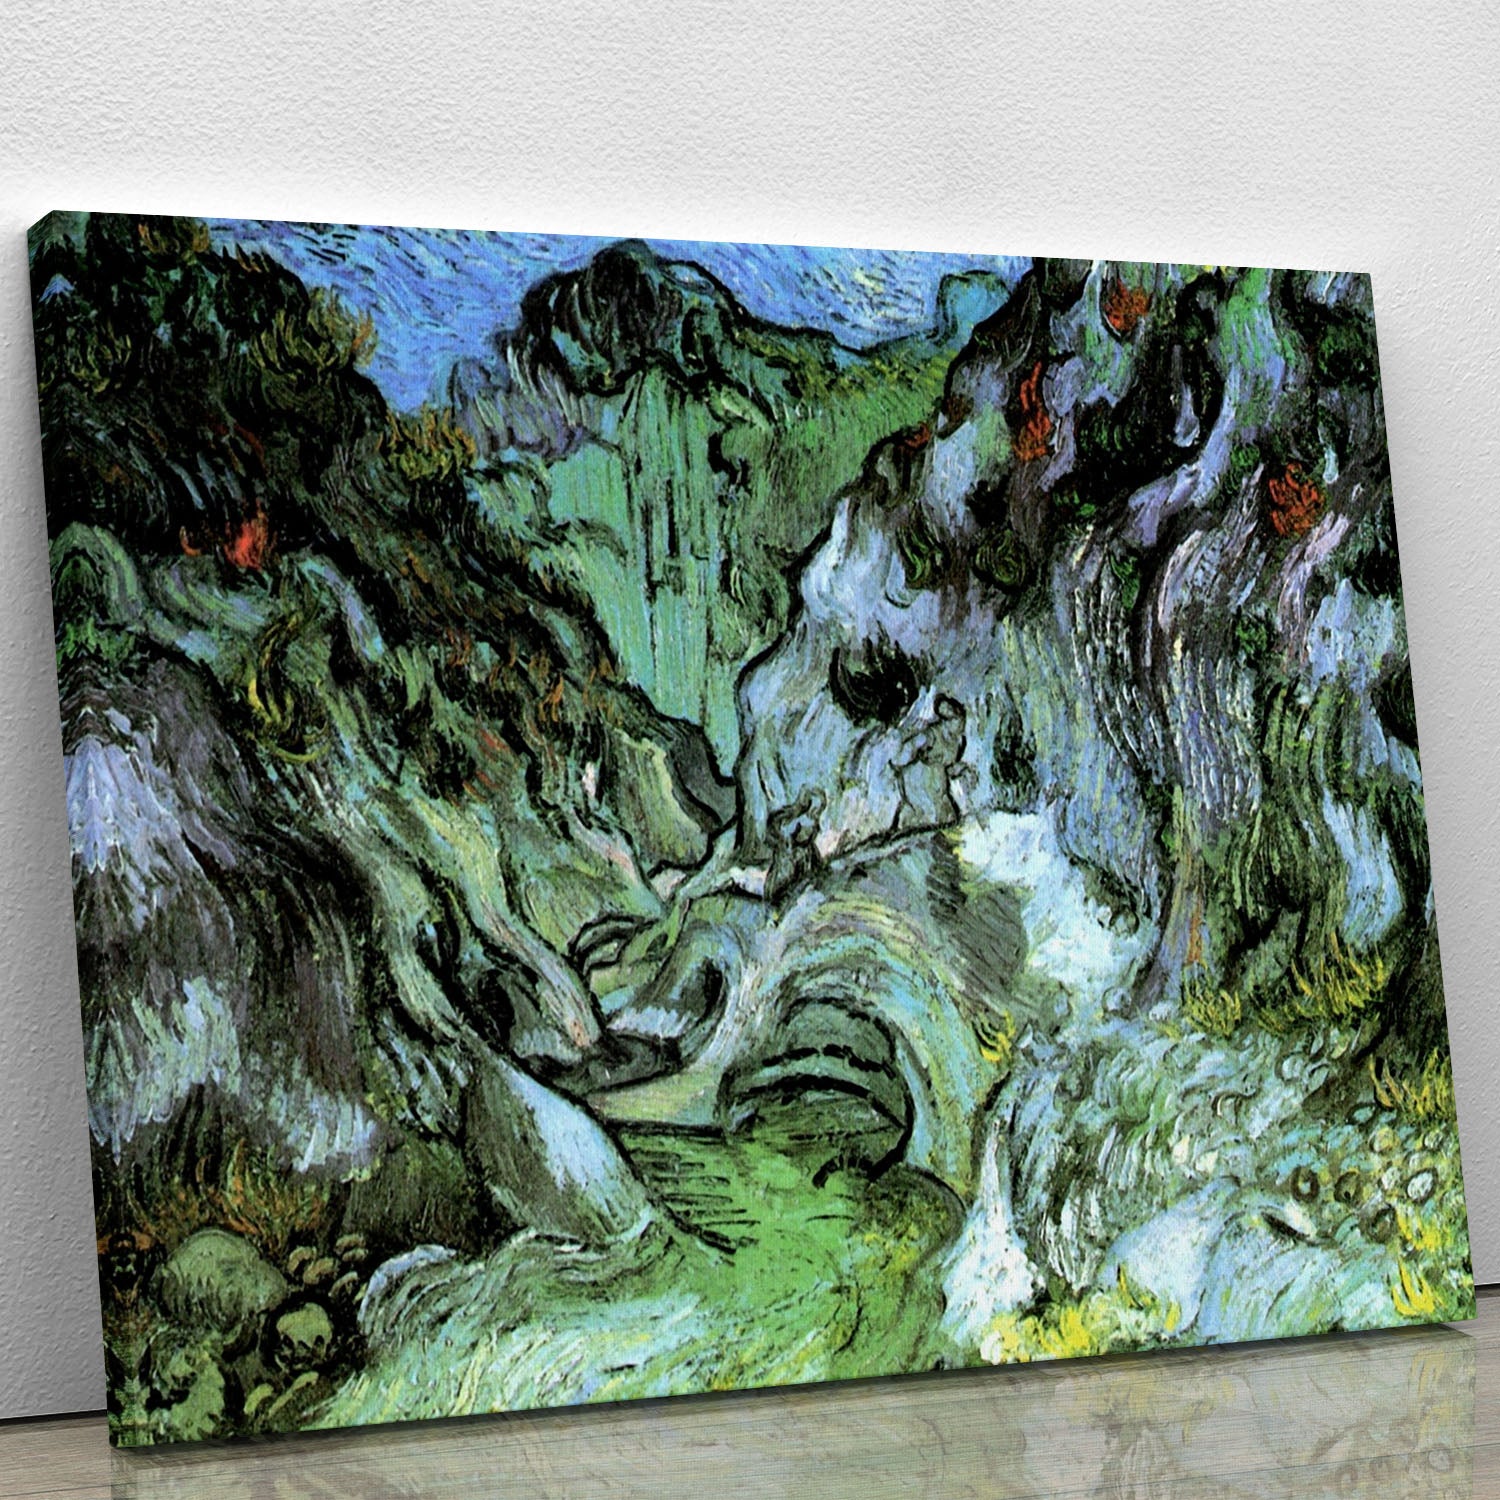 Les Peiroulets Ravine 2 by Van Gogh Canvas Print or Poster - Canvas Art Rocks - 1